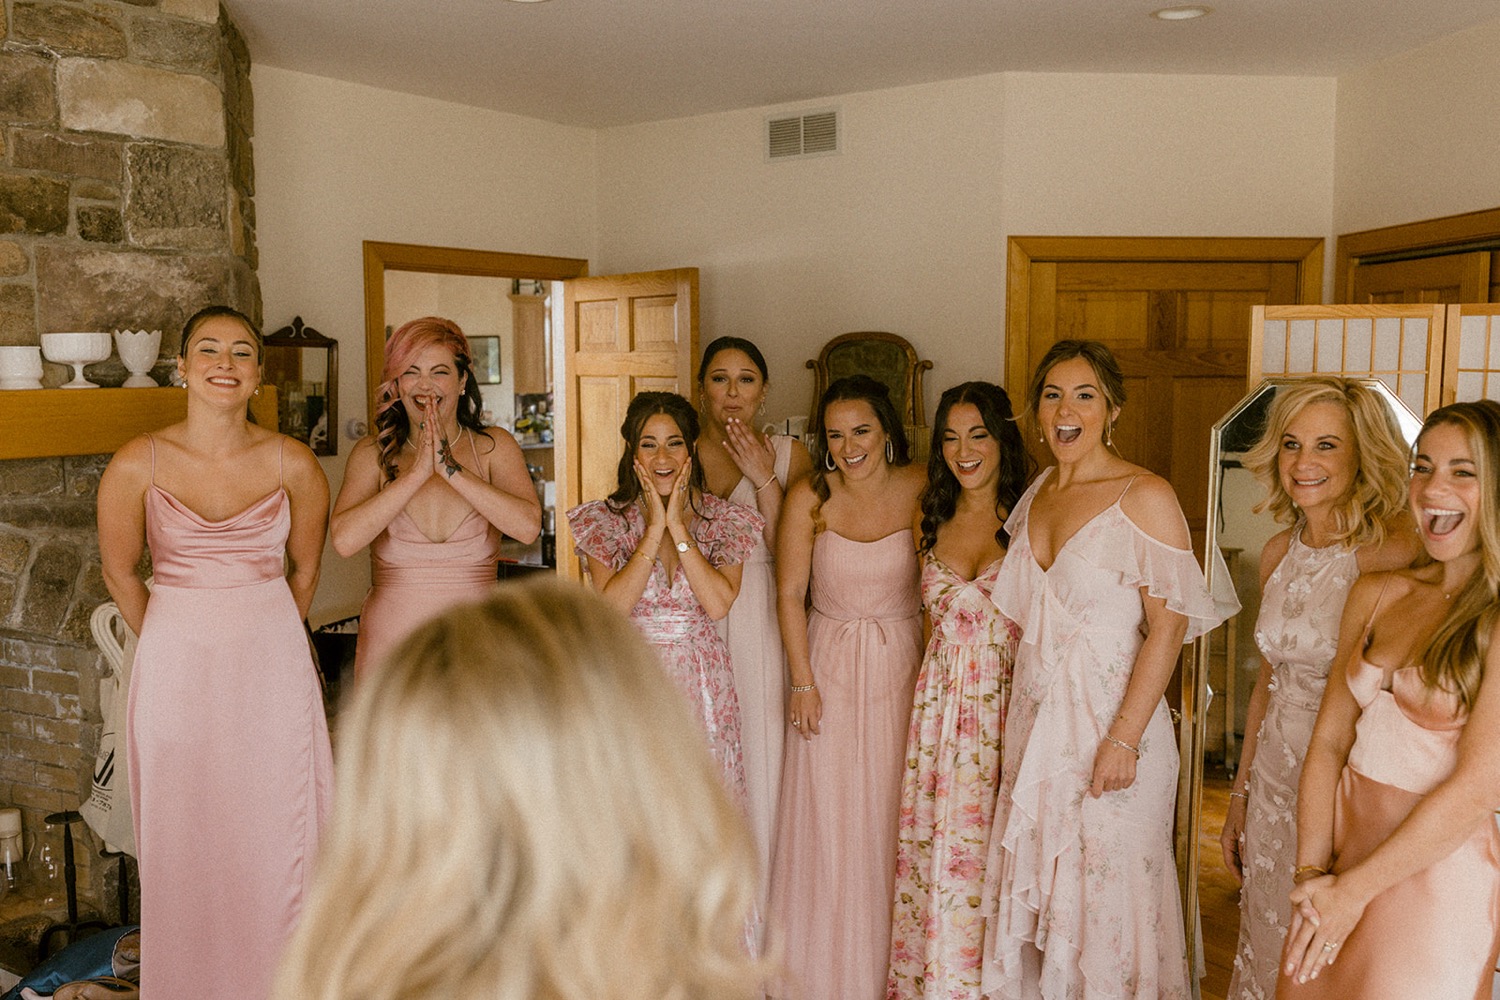 bridesmaids reaction to bride in wedding dress